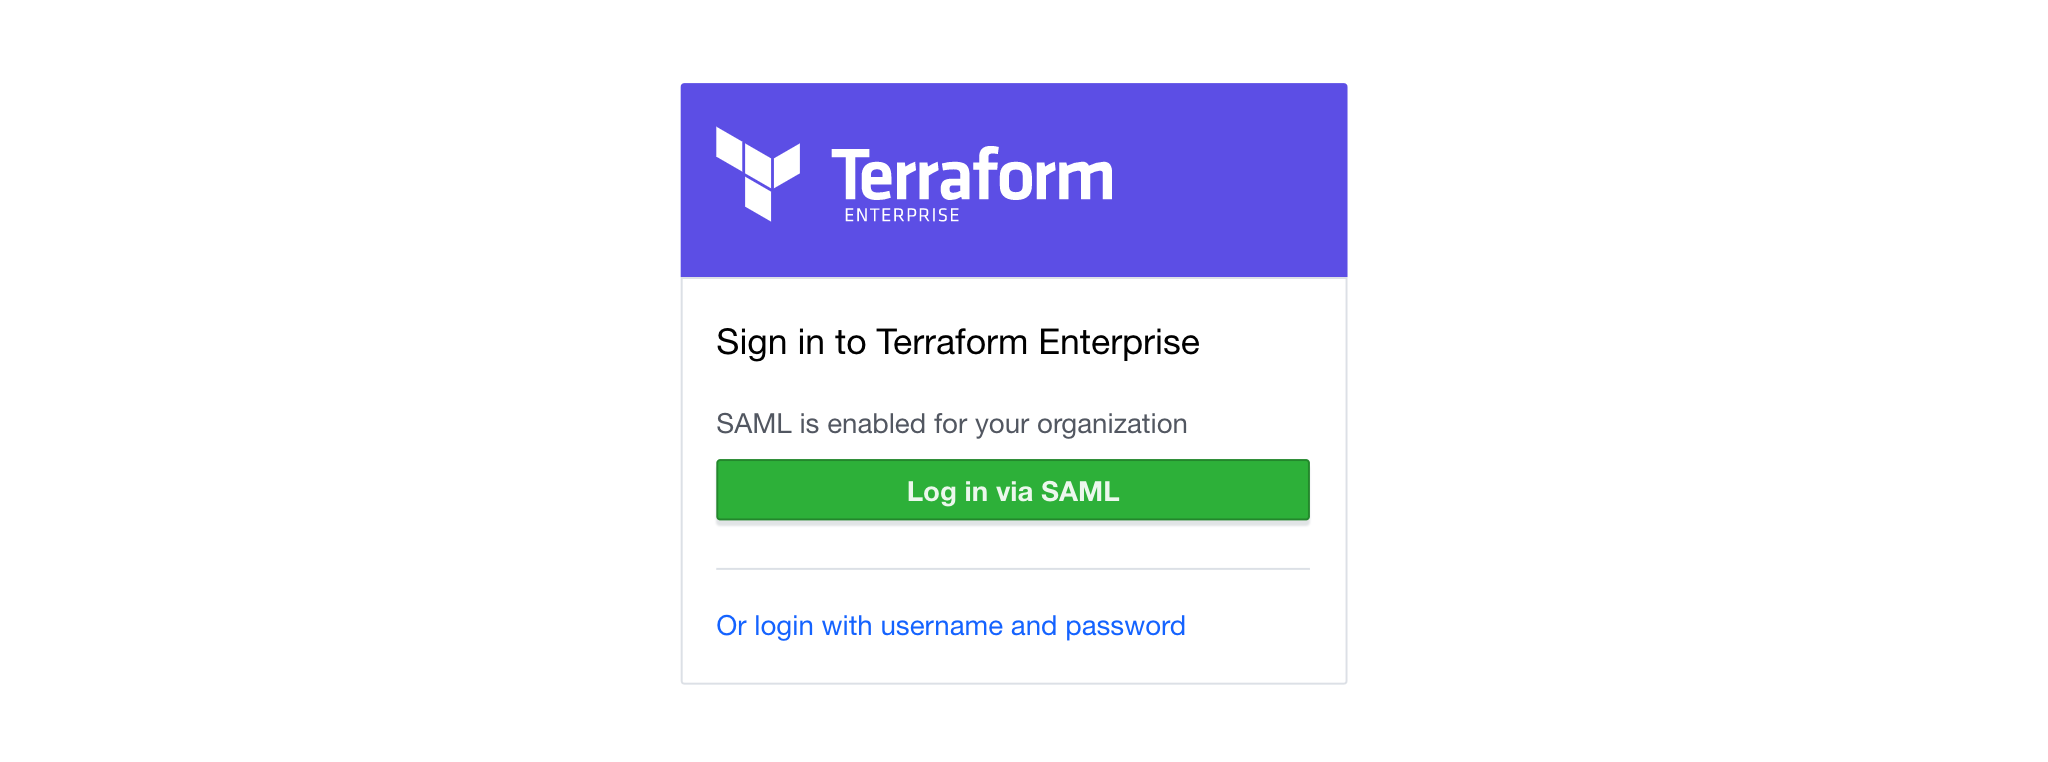 Terraform Enterprise dashboard shows SAML/SSO button to log in